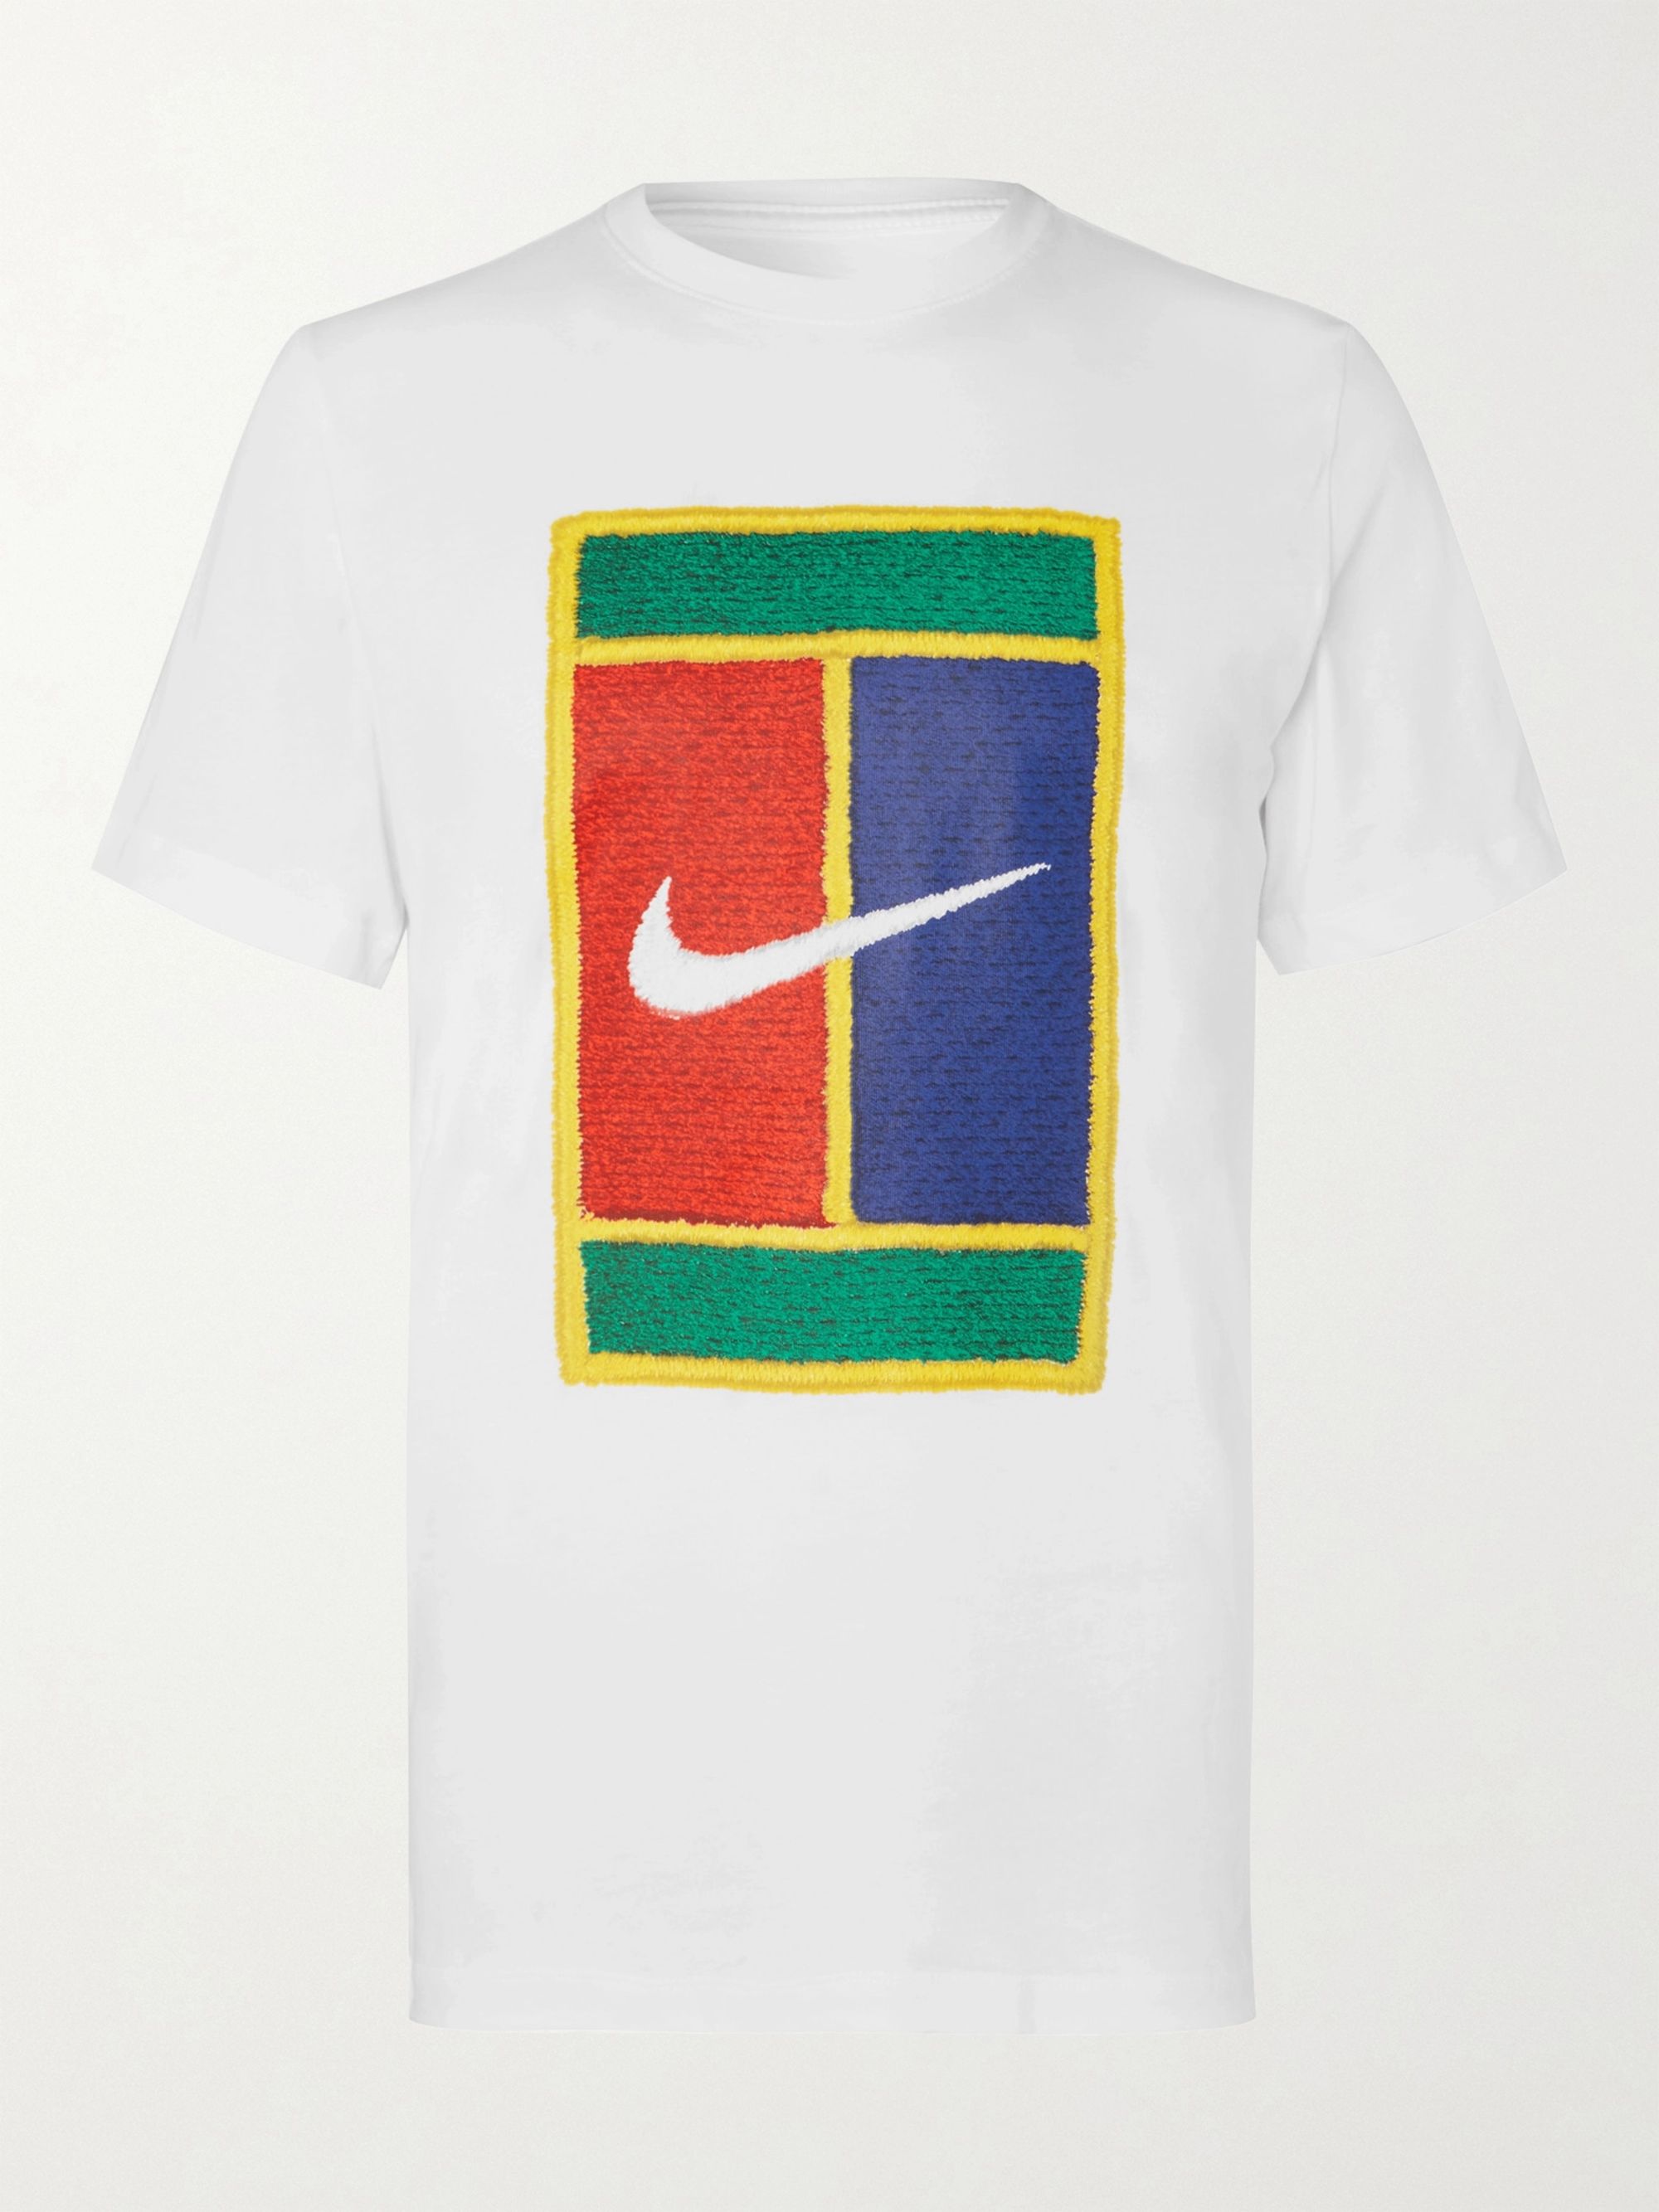 nike tennis tee shirt cheap online